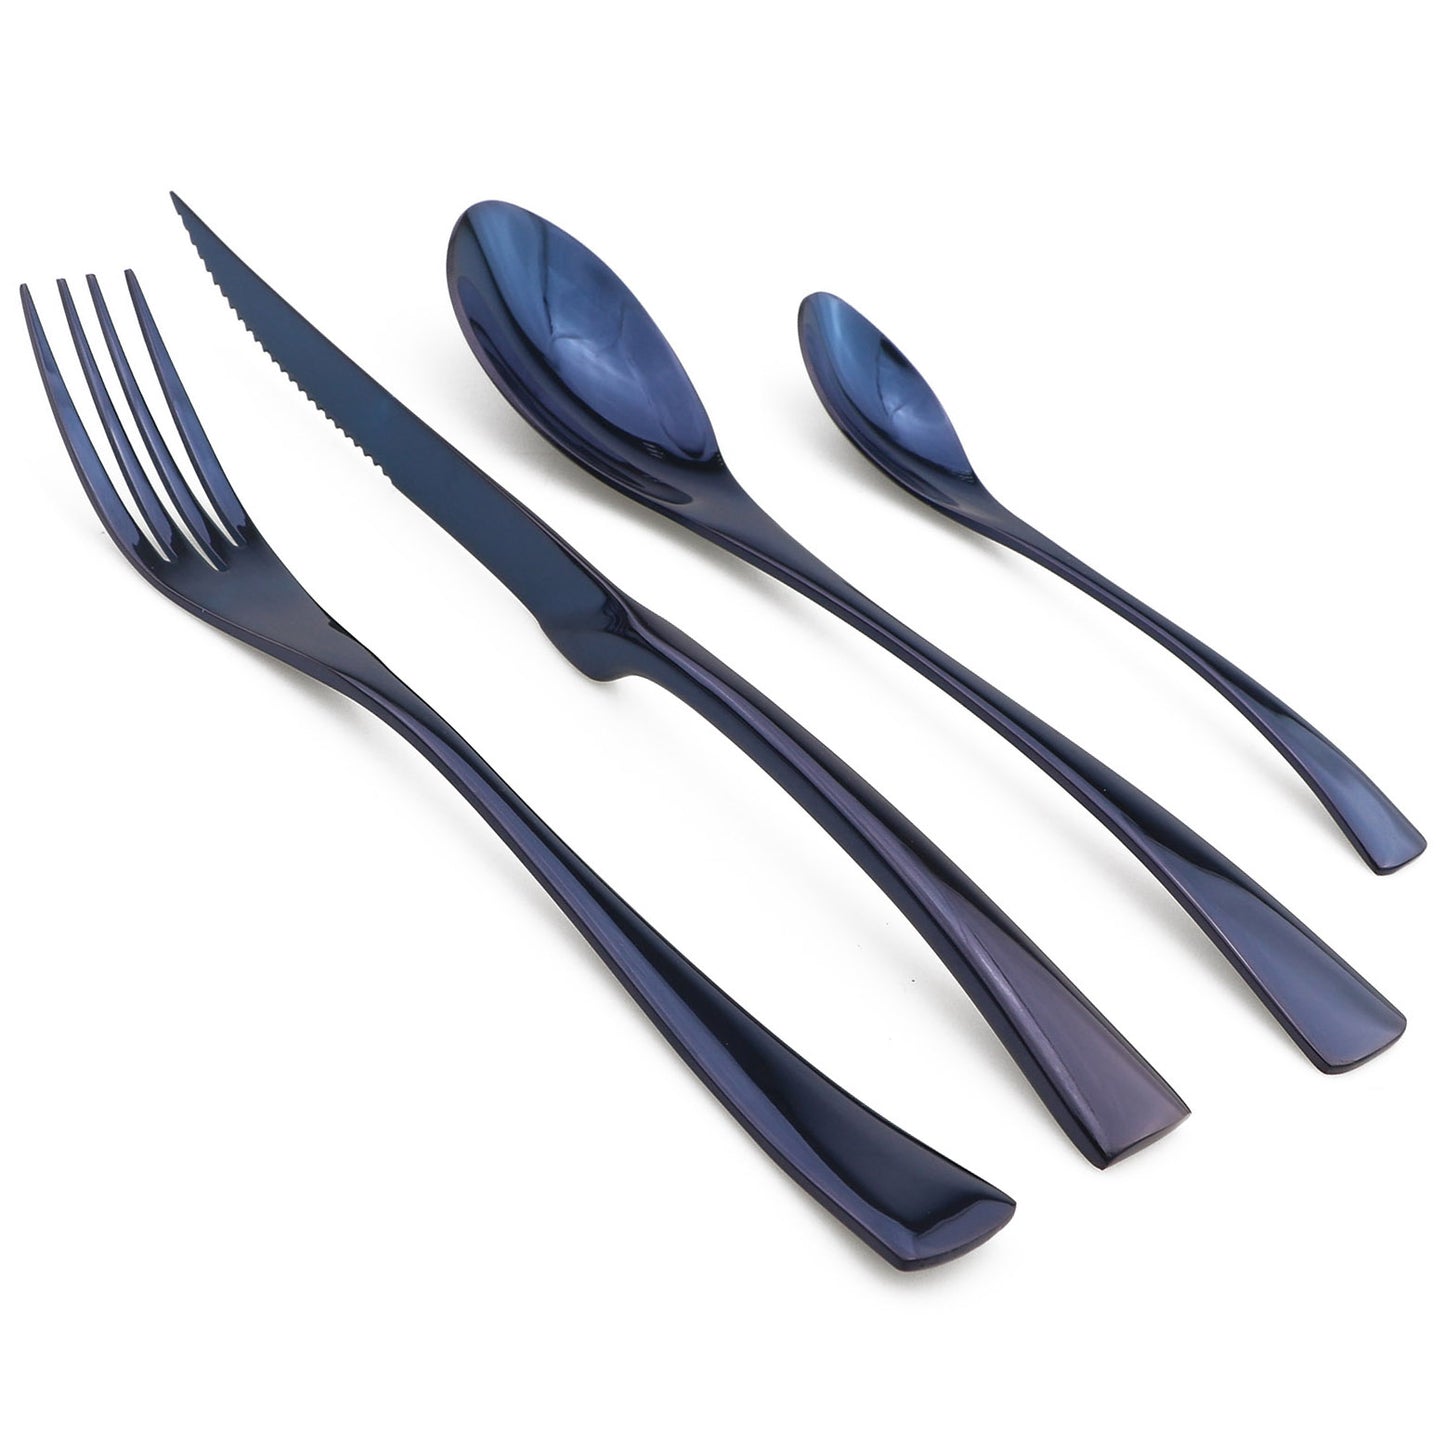 Stainless Steel Cutlery Set Mondsee (7 Colors)